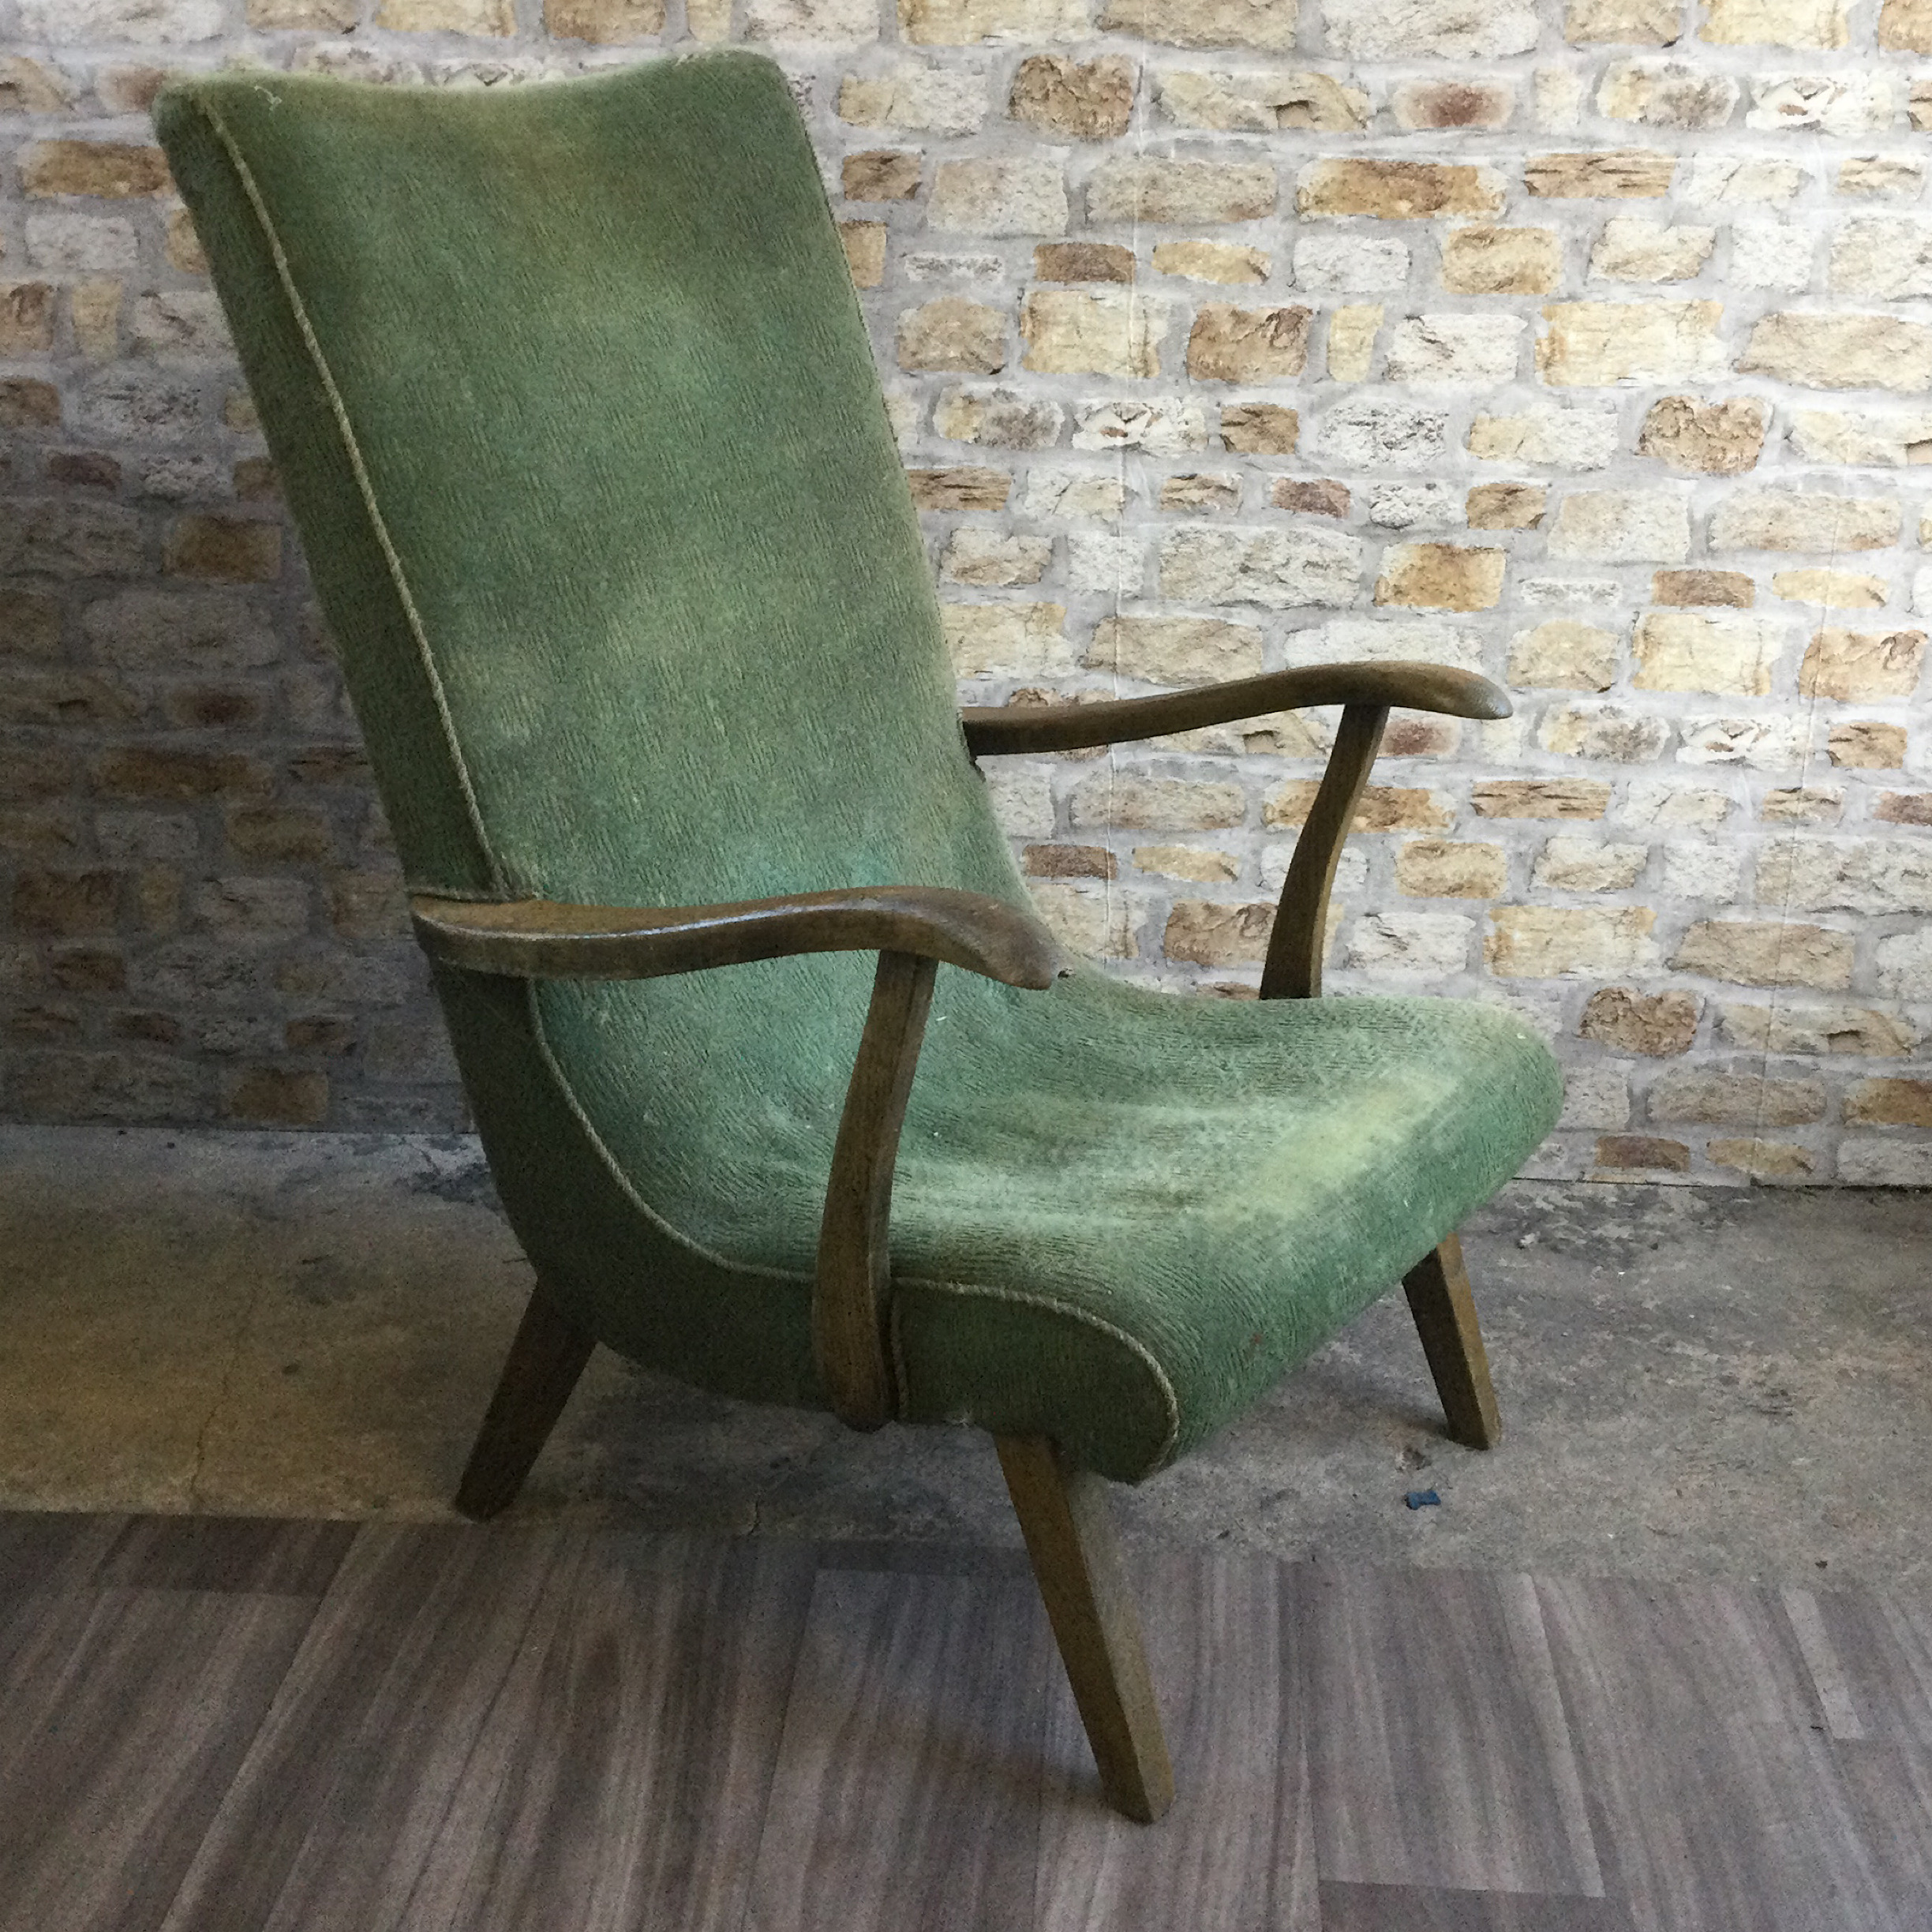 Mid Century Oak Danish Chair Before Refurb